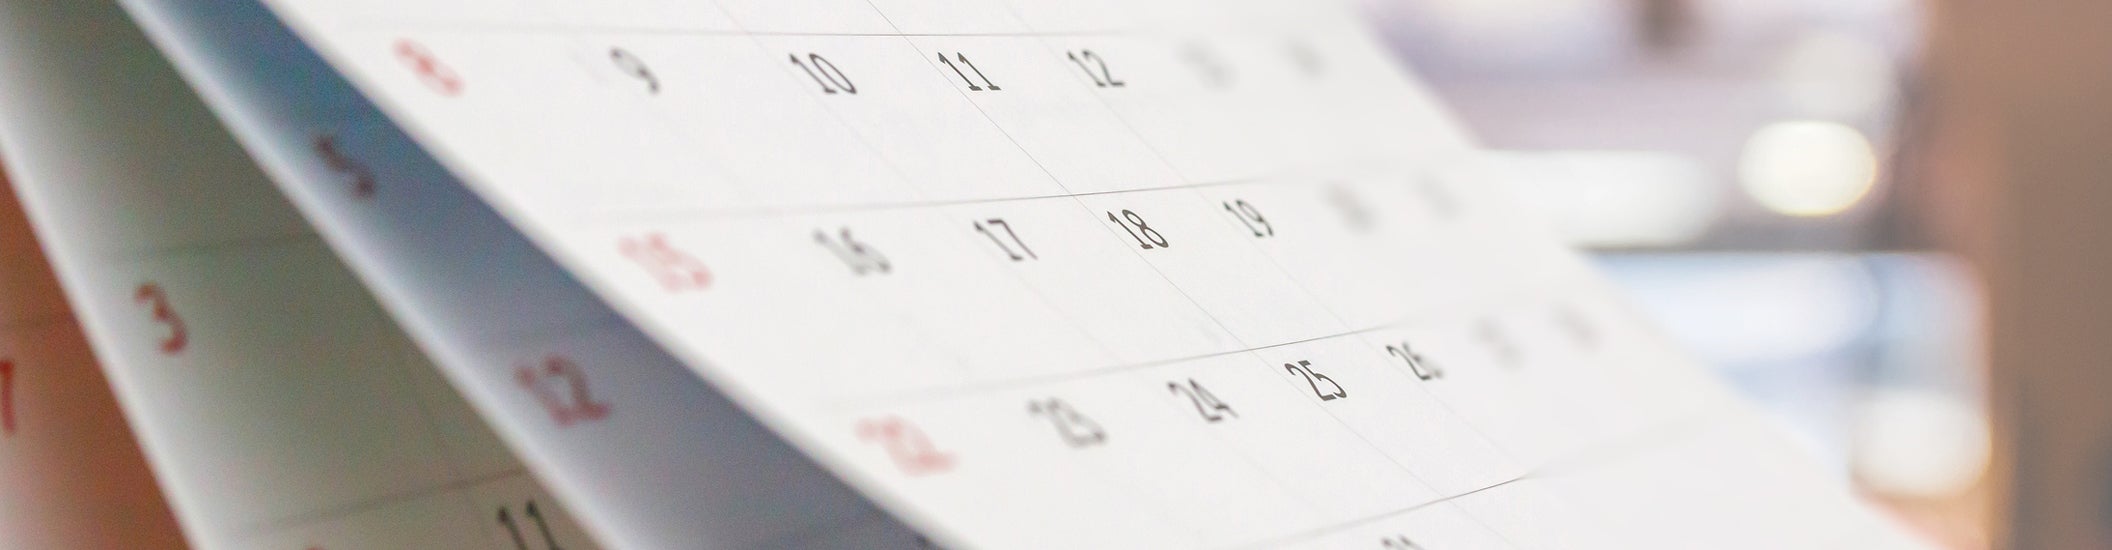 "calendar showing dates"